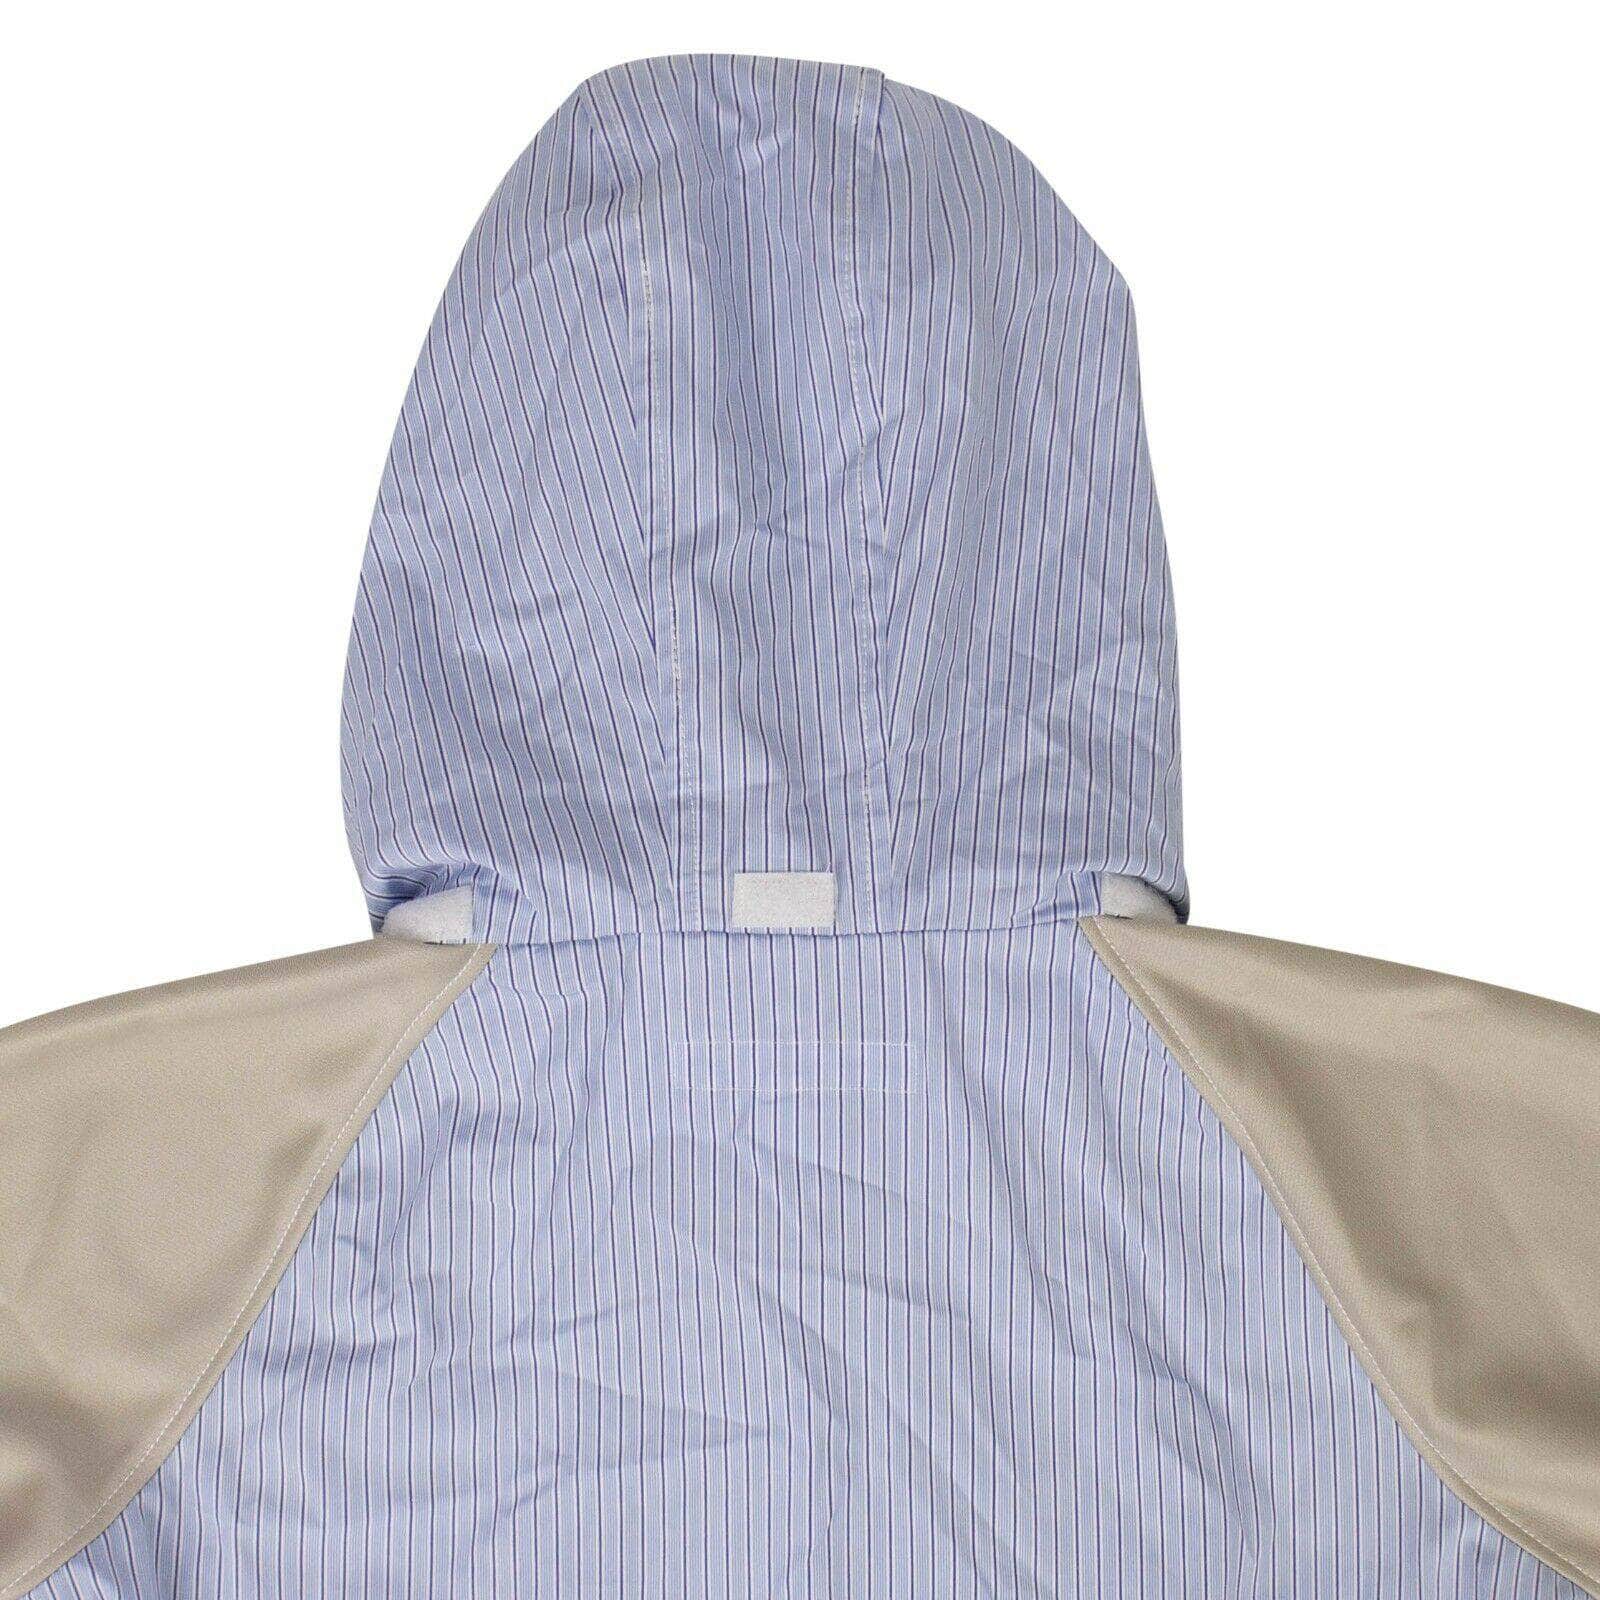 CDG SHIRT Men's Sweaters Cotton Stripe Long Sleeves Hooded Shirt - Gray/Blue